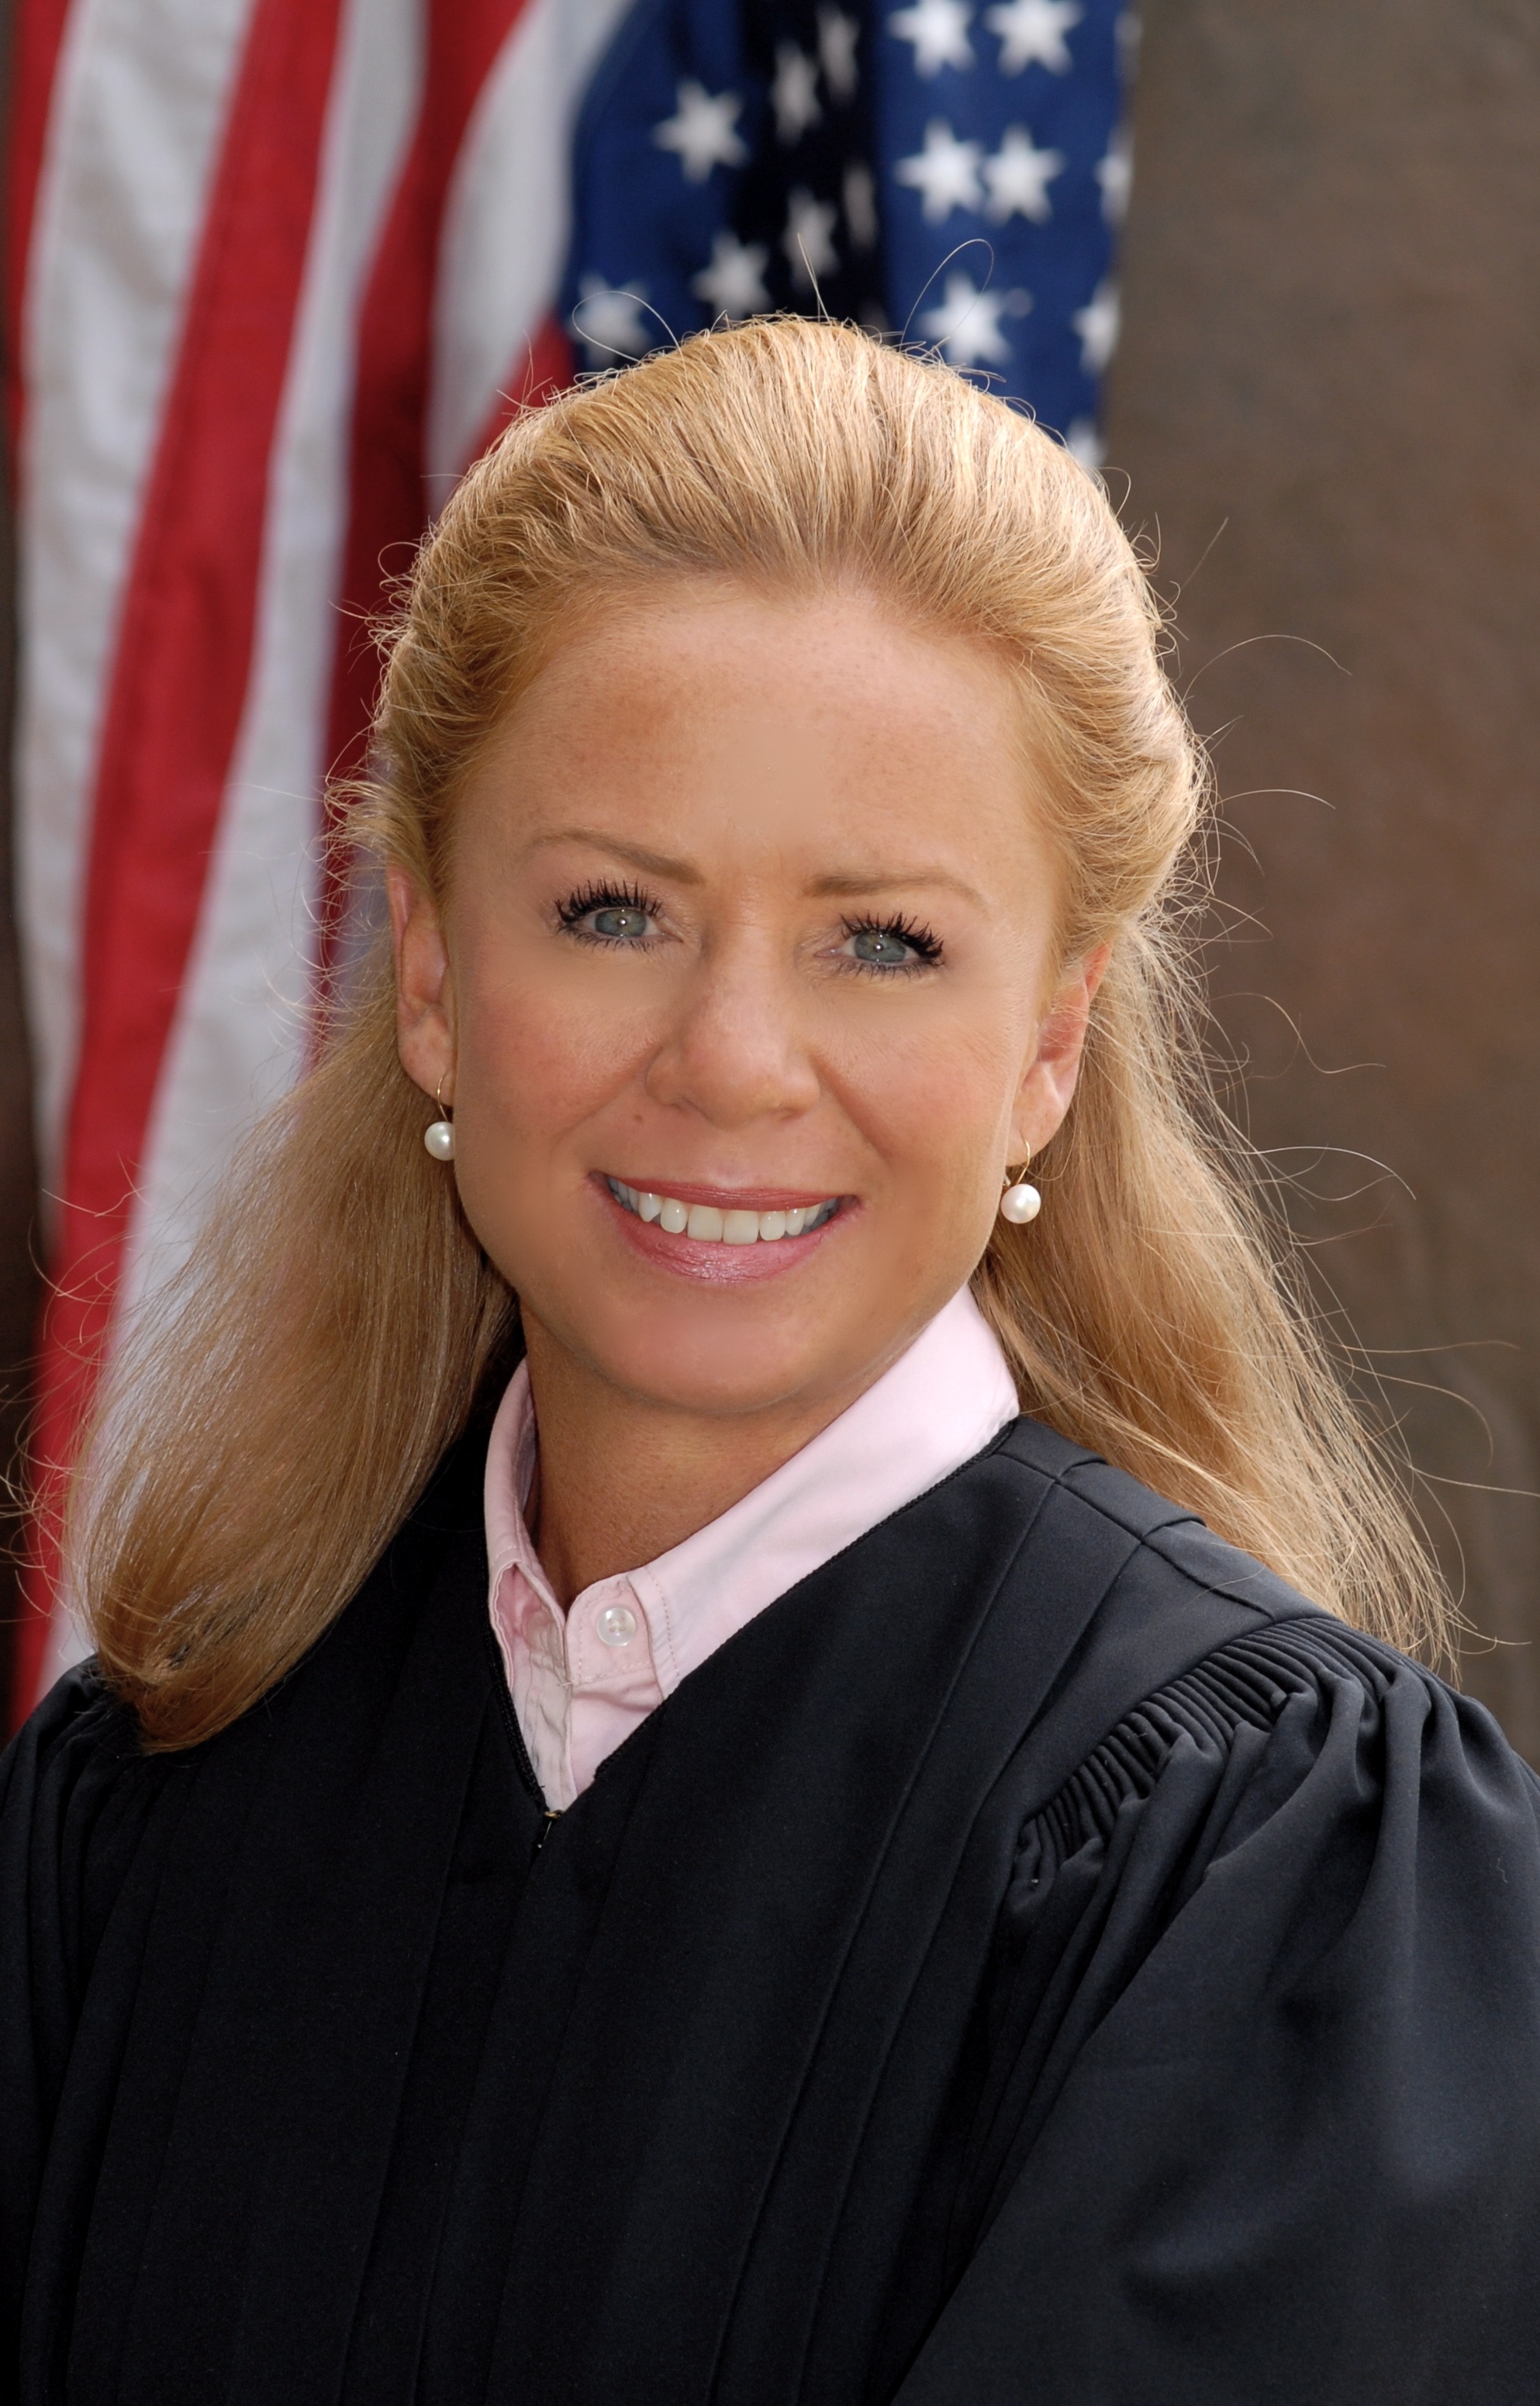 Chief Justice Annette Kingsland Ziegler